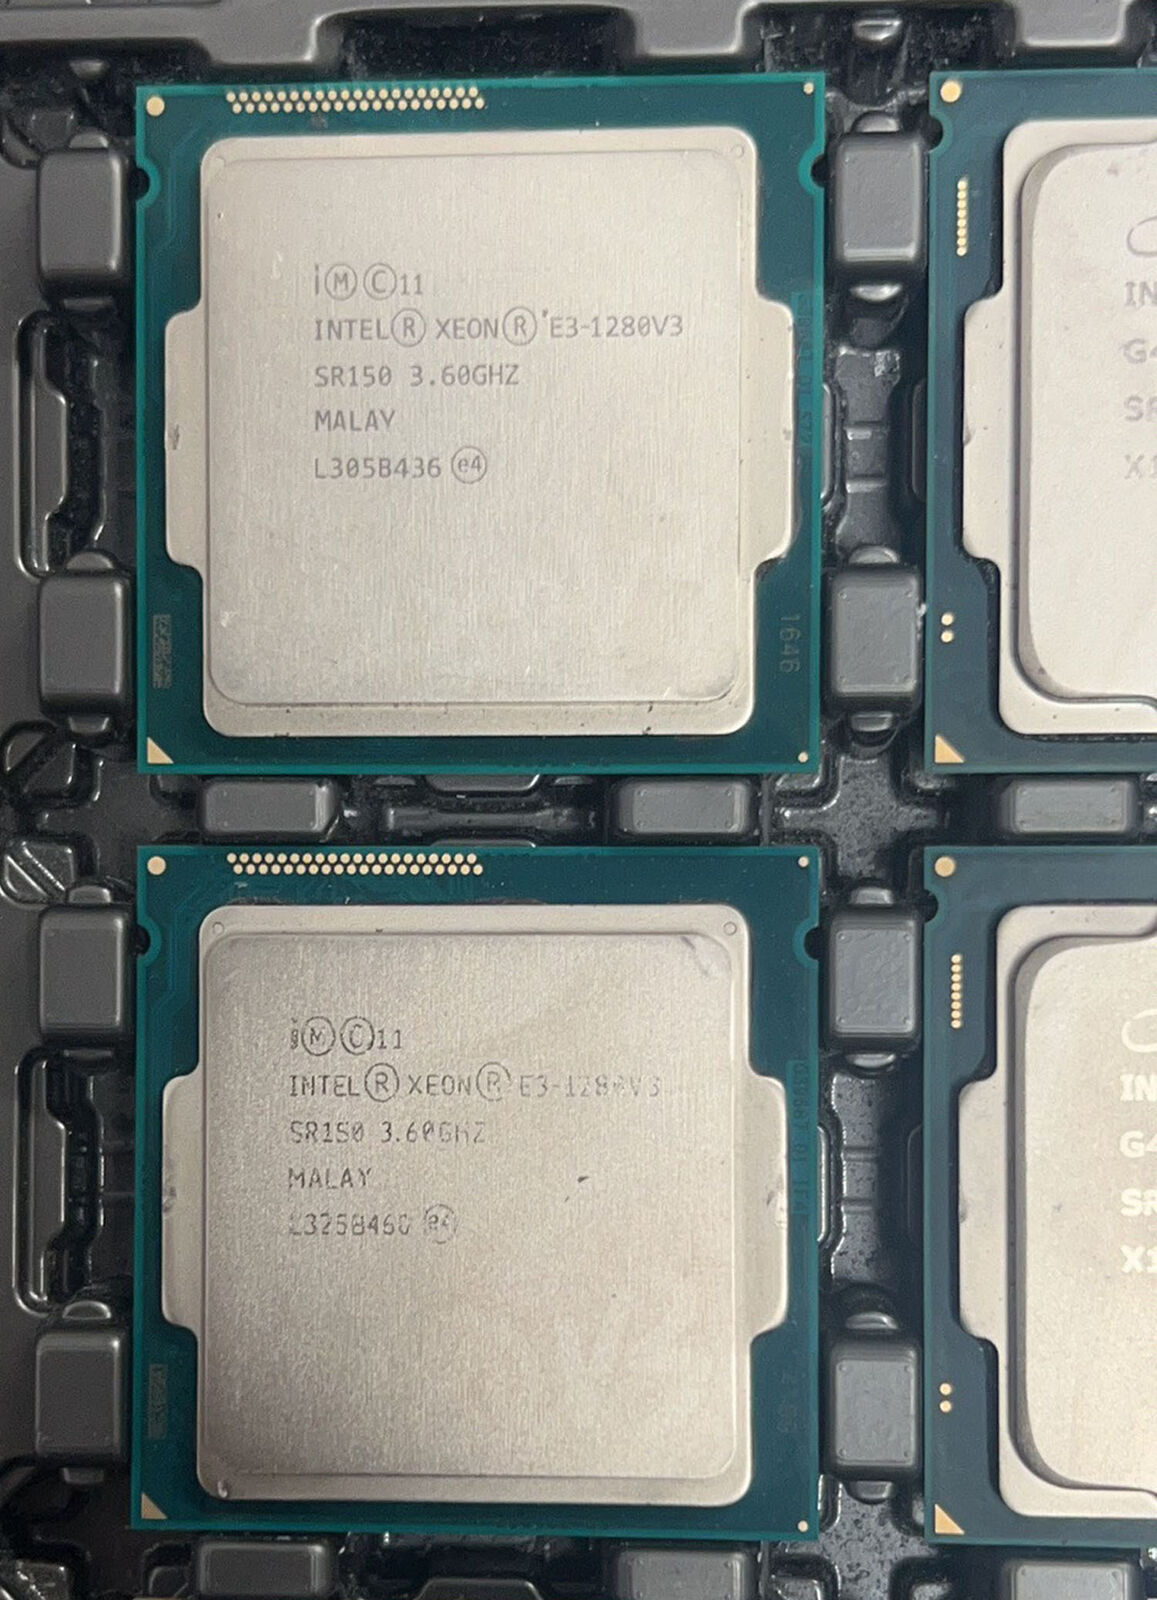 Intel Xeon E3-1280L V3 3.6GHz 4-core 8-thread 8MB LGA1155 CPU processor